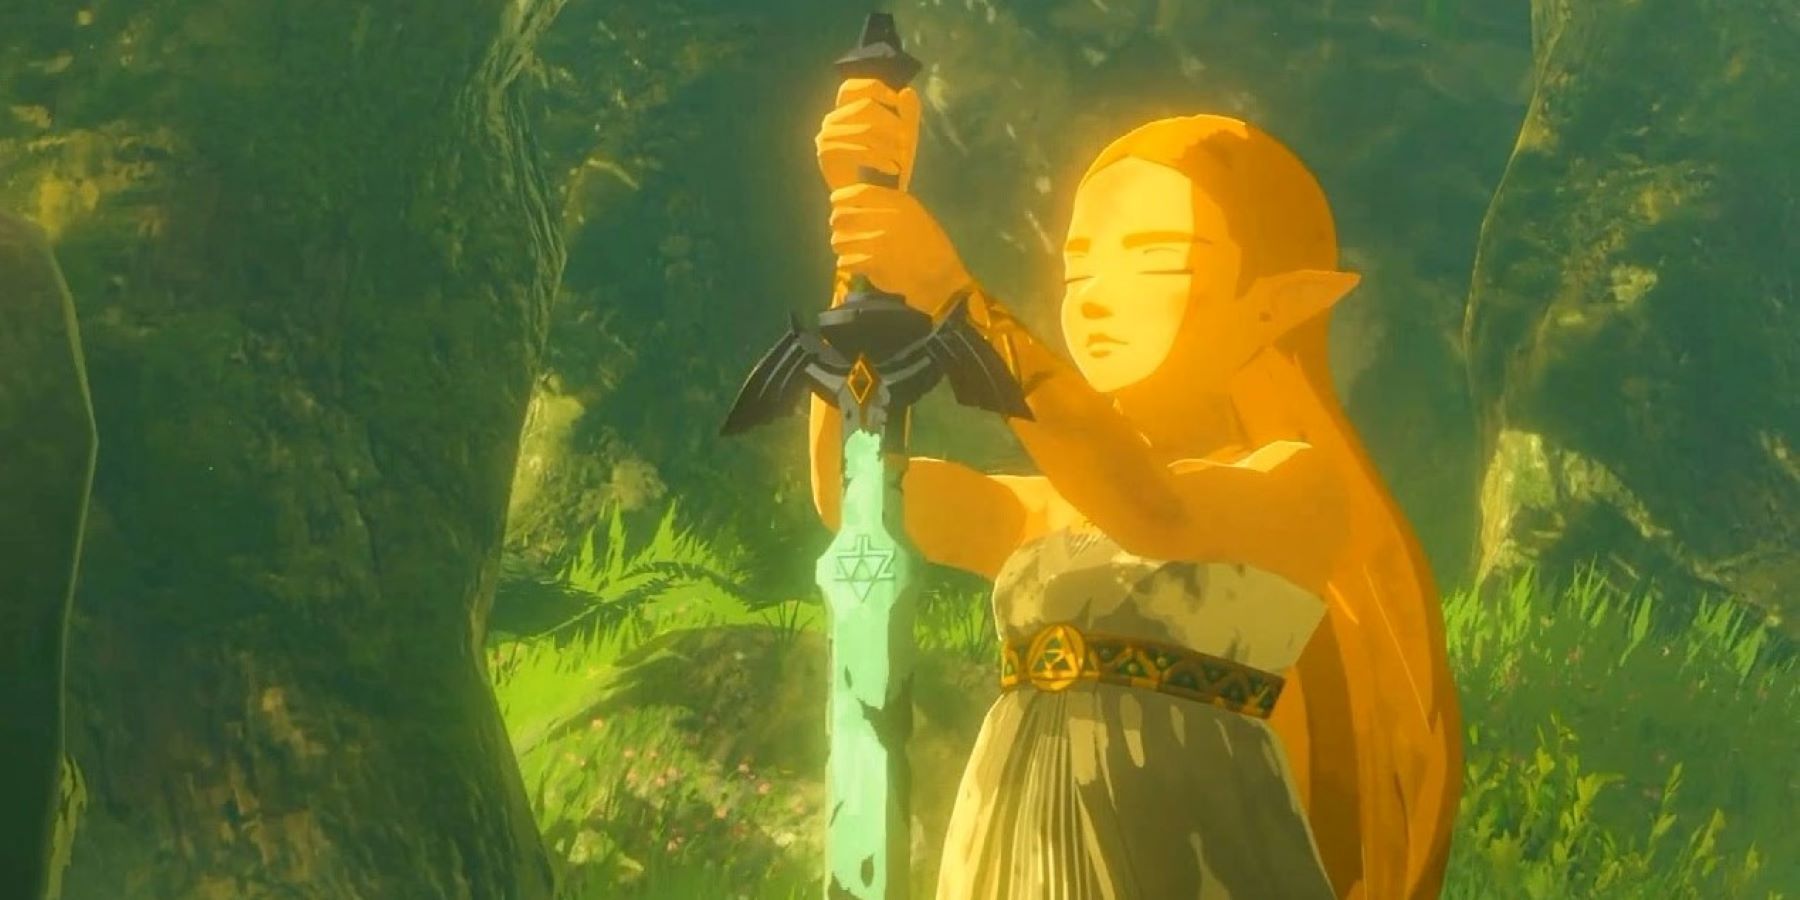 Zelda returning the Master Sword to its pedestal under the Great Deku Tree in The Legend of Zelda: Breath of the Wild